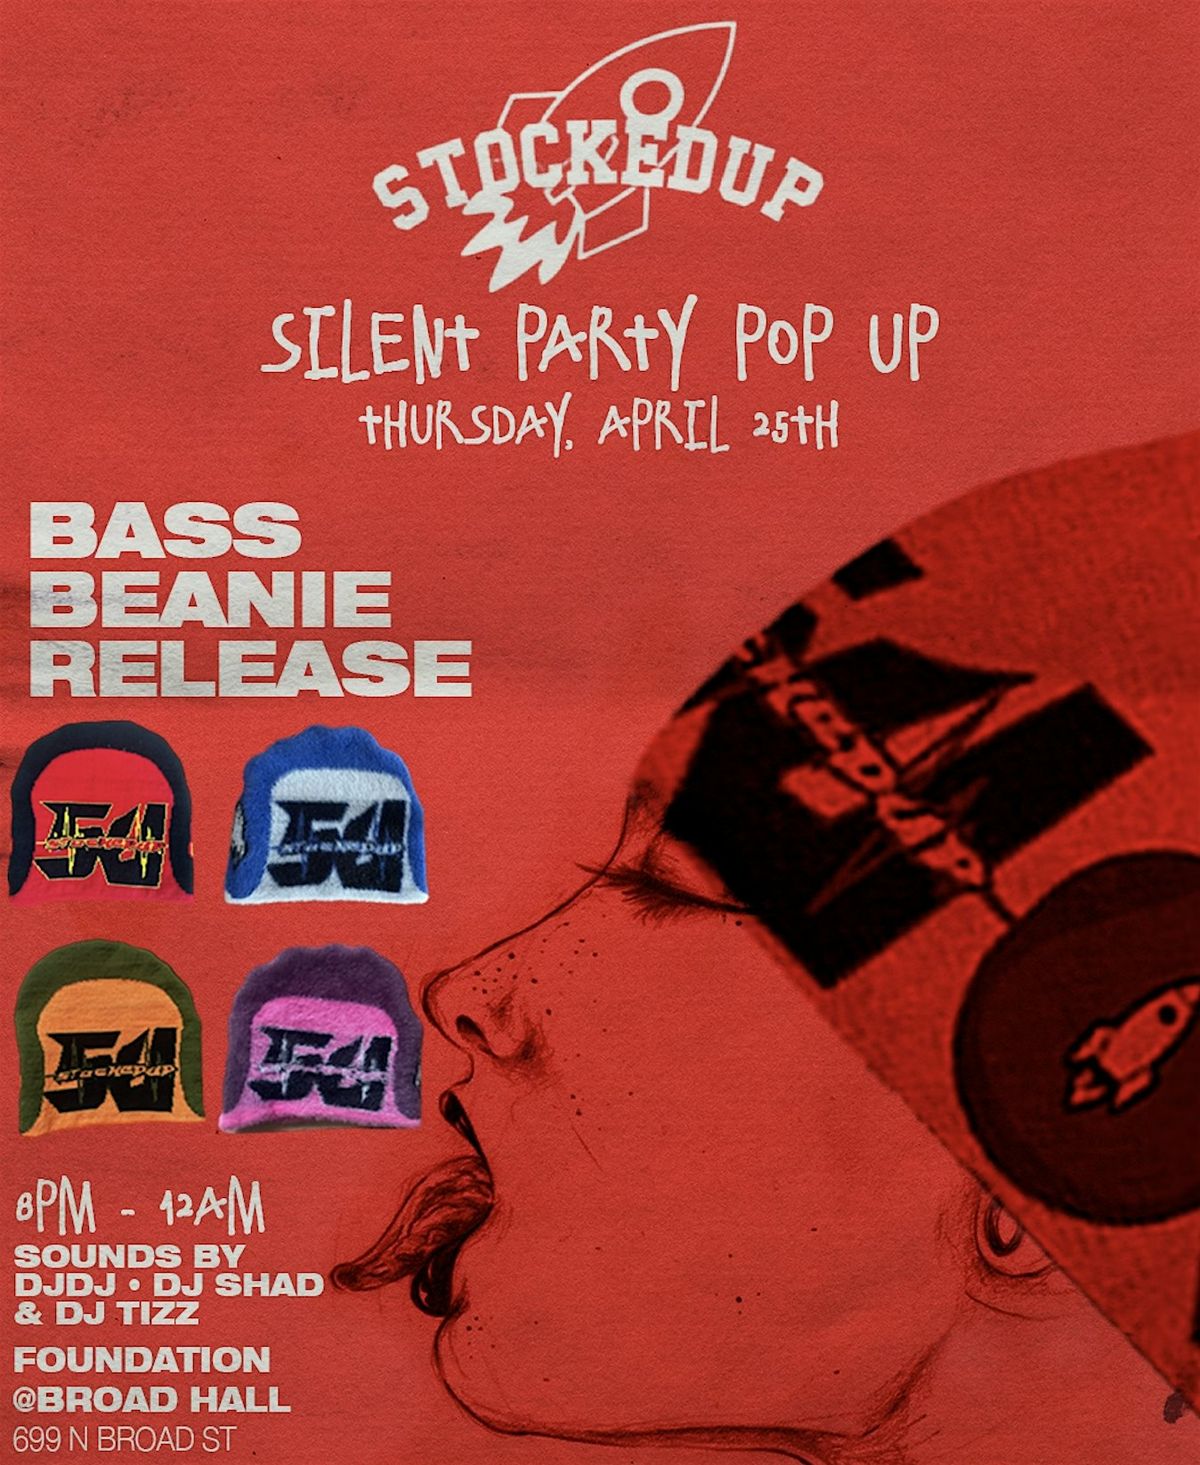 STOCKEDUP SILENT POP-UP PARTY